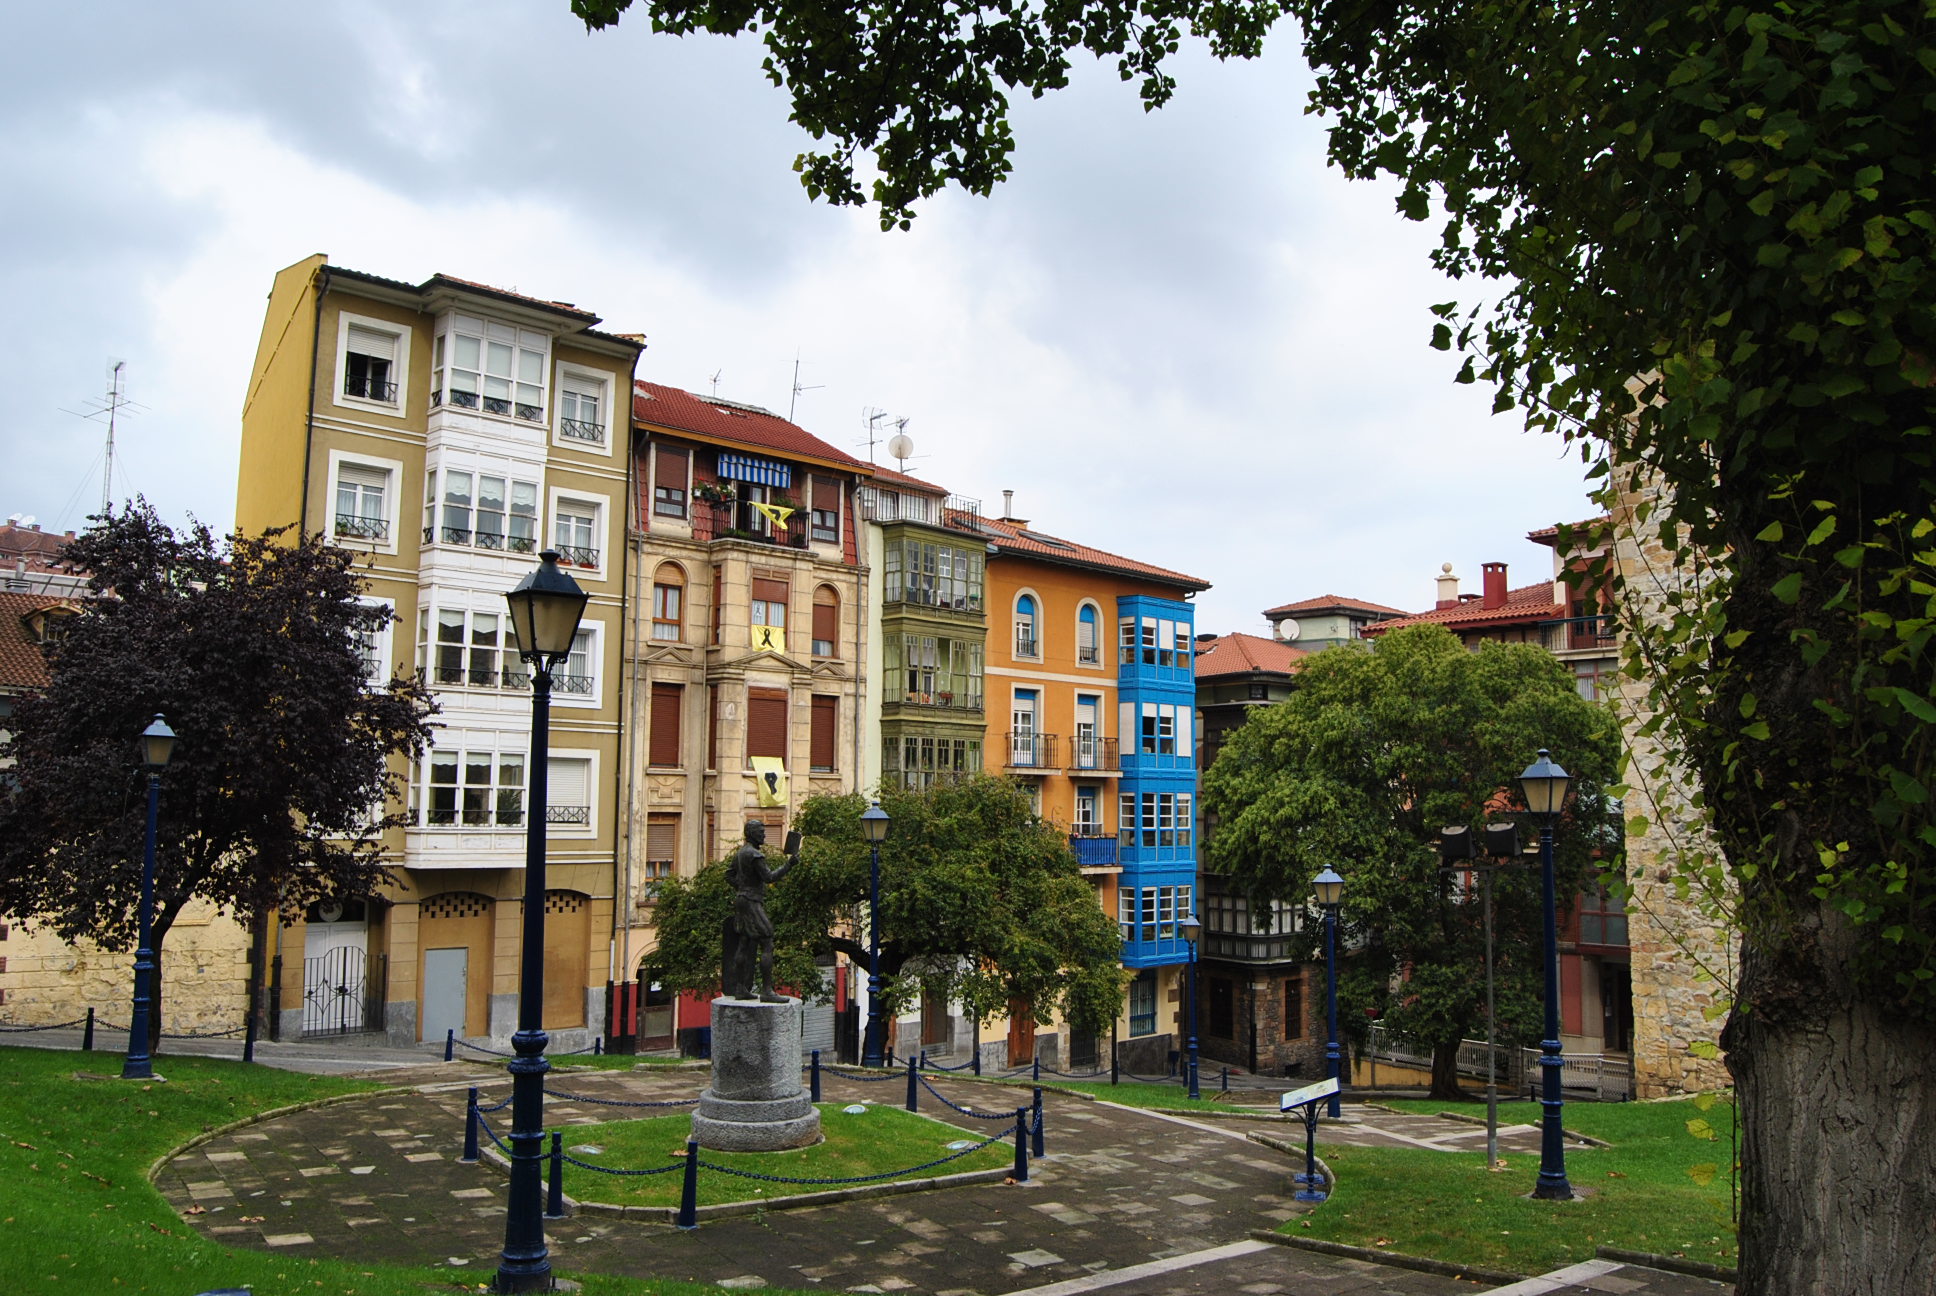 Bilbao/Donosti/San Juan de Gaztelugatxe